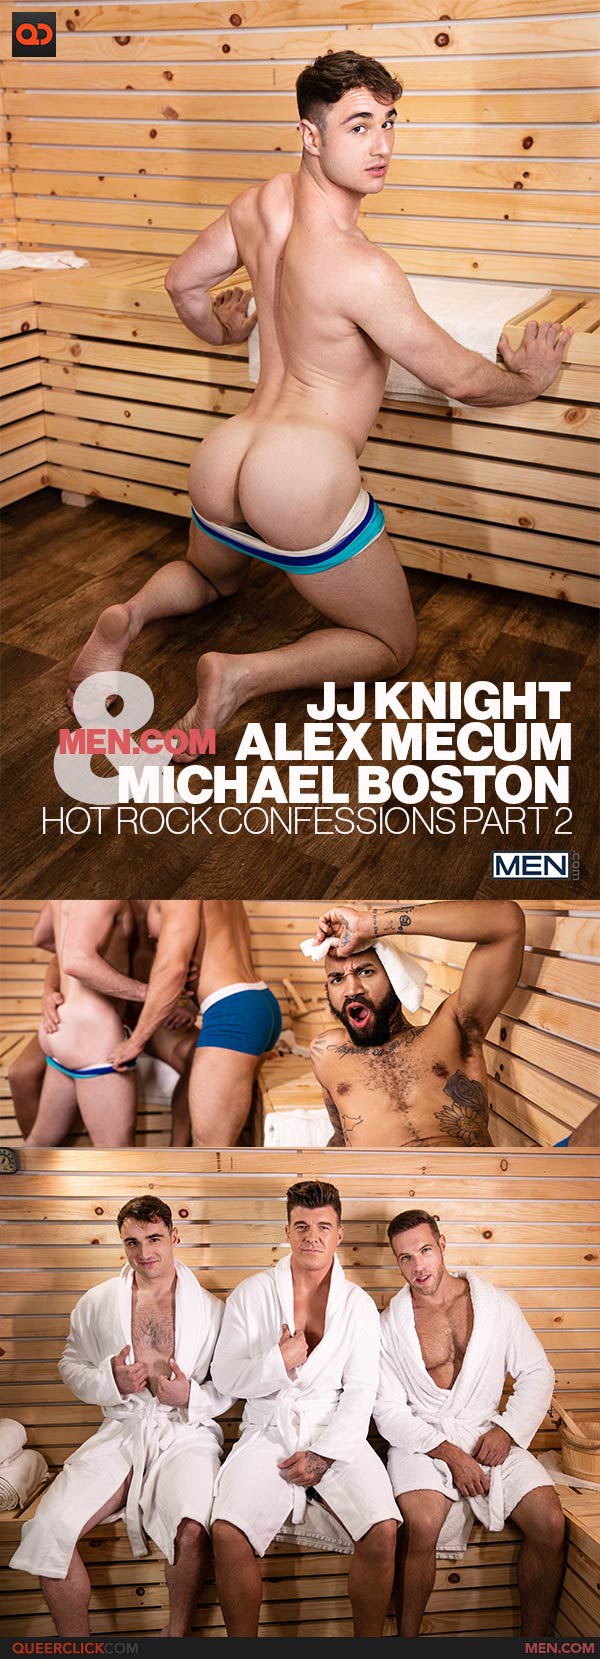 Men.com: Alex Mecum, JJ Knight and Michael Boston